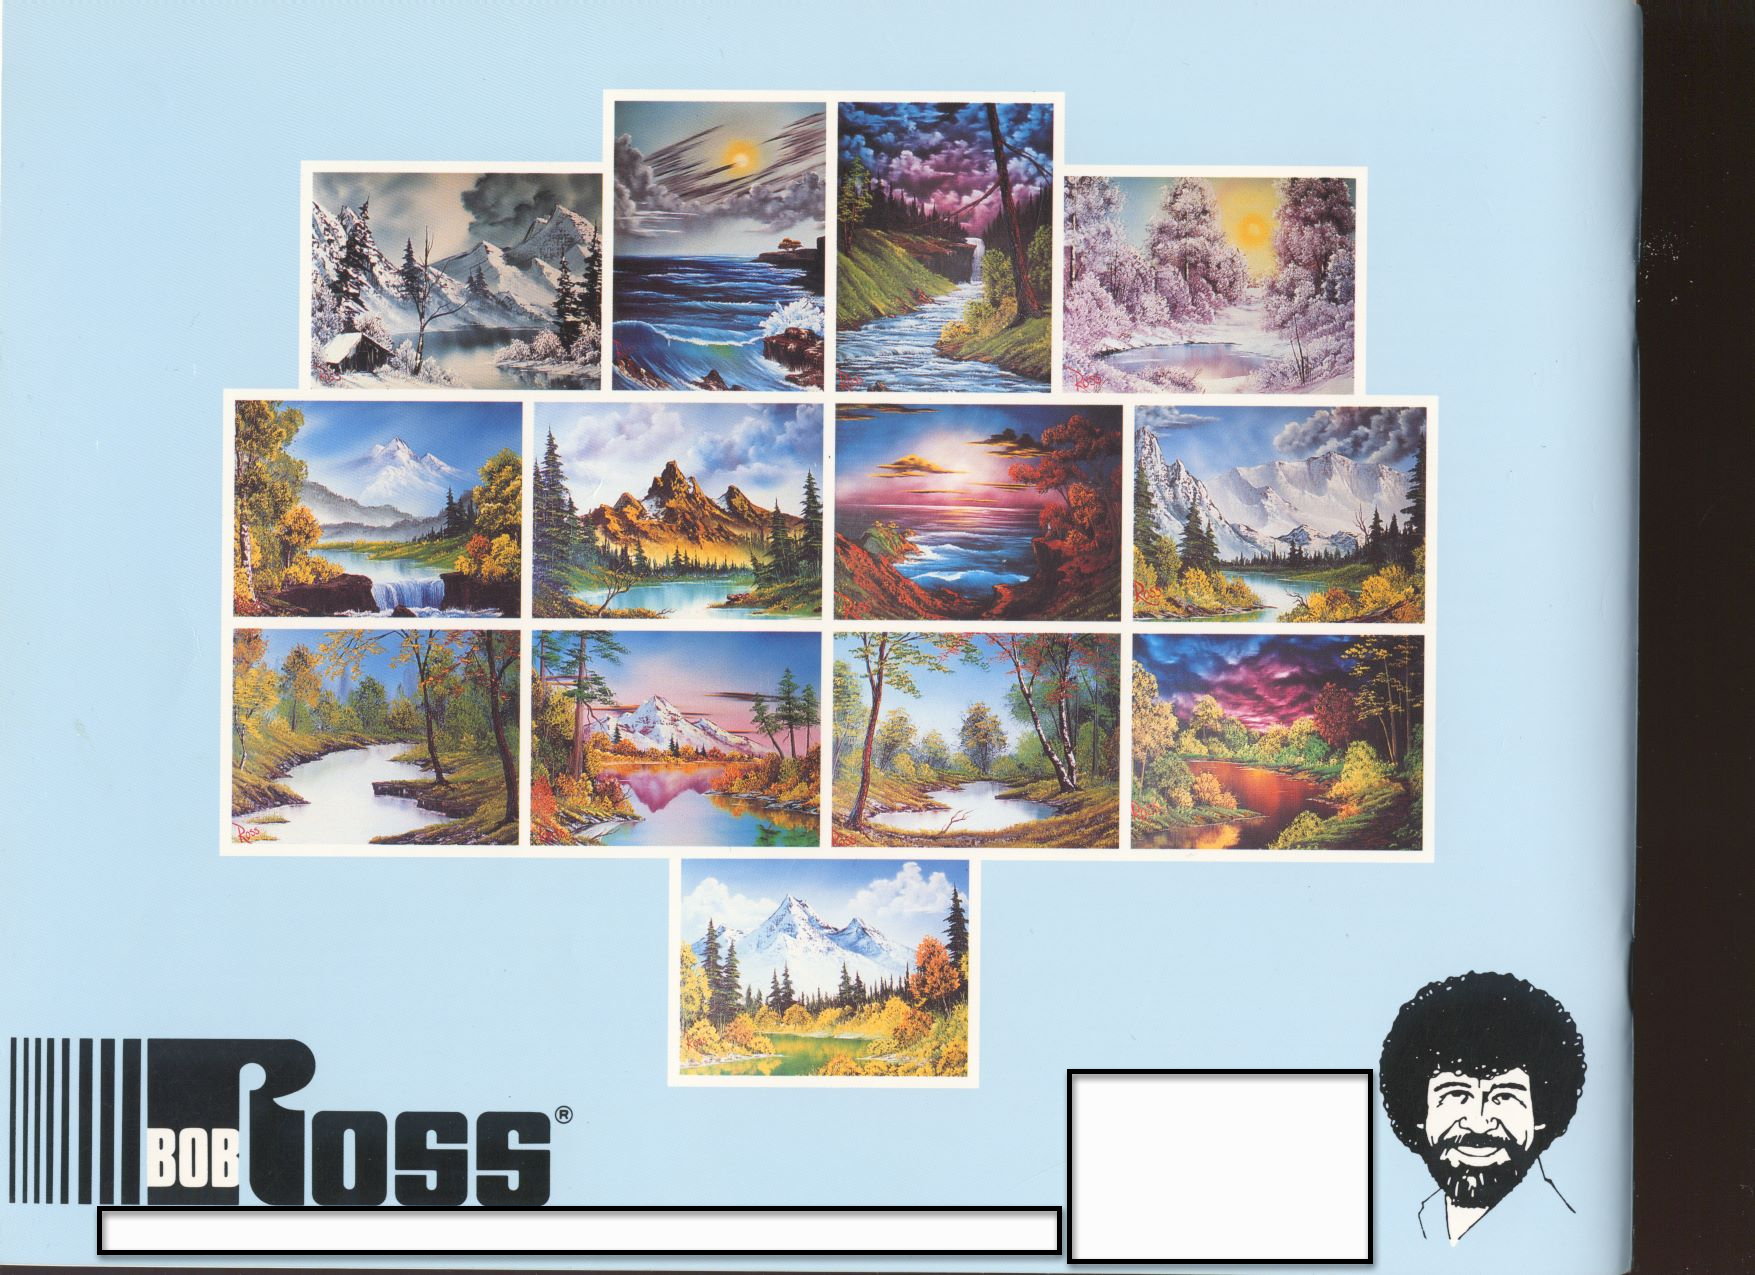 Bob Ross - The Joy of Painting - Season 16-17-18-18-20